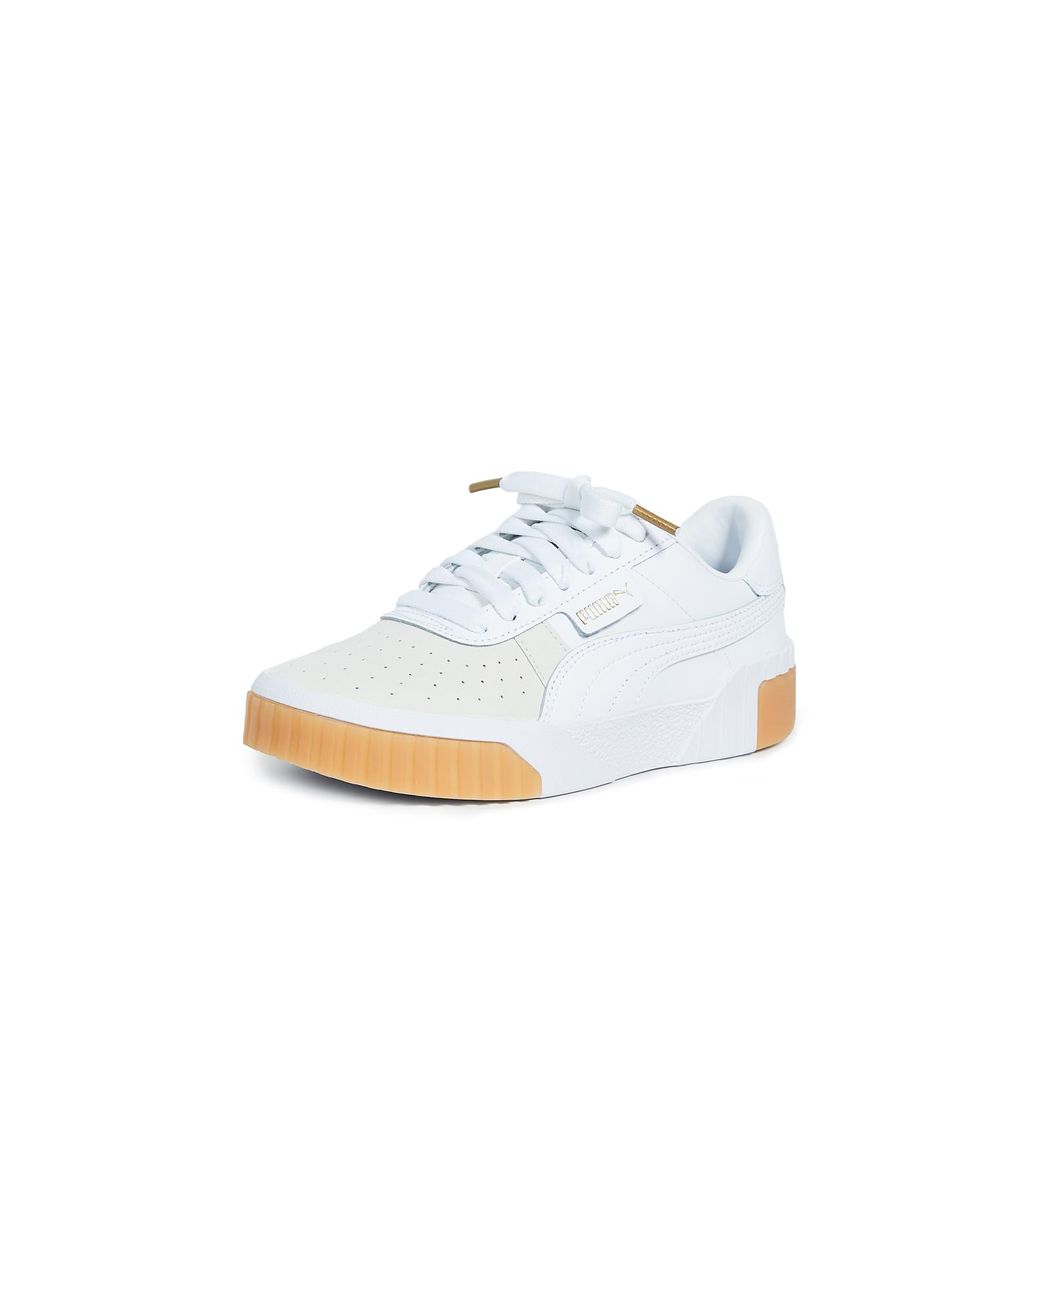 PUMA Cali Exotic Sneakers in White | Lyst